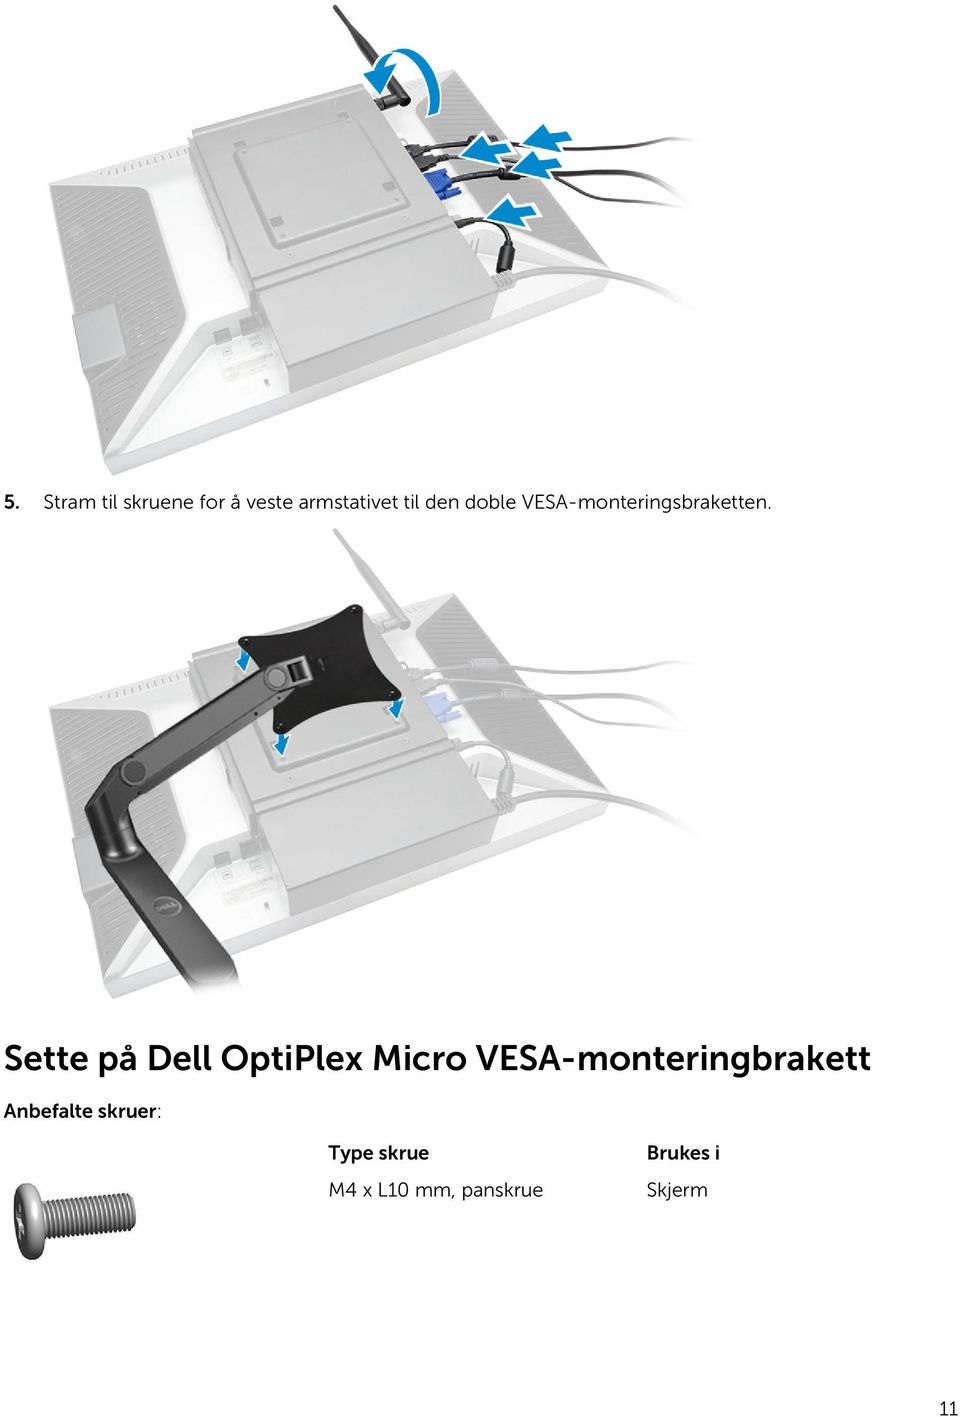 Sette på Dell OptiPlex Micro VESA-monteringbrakett